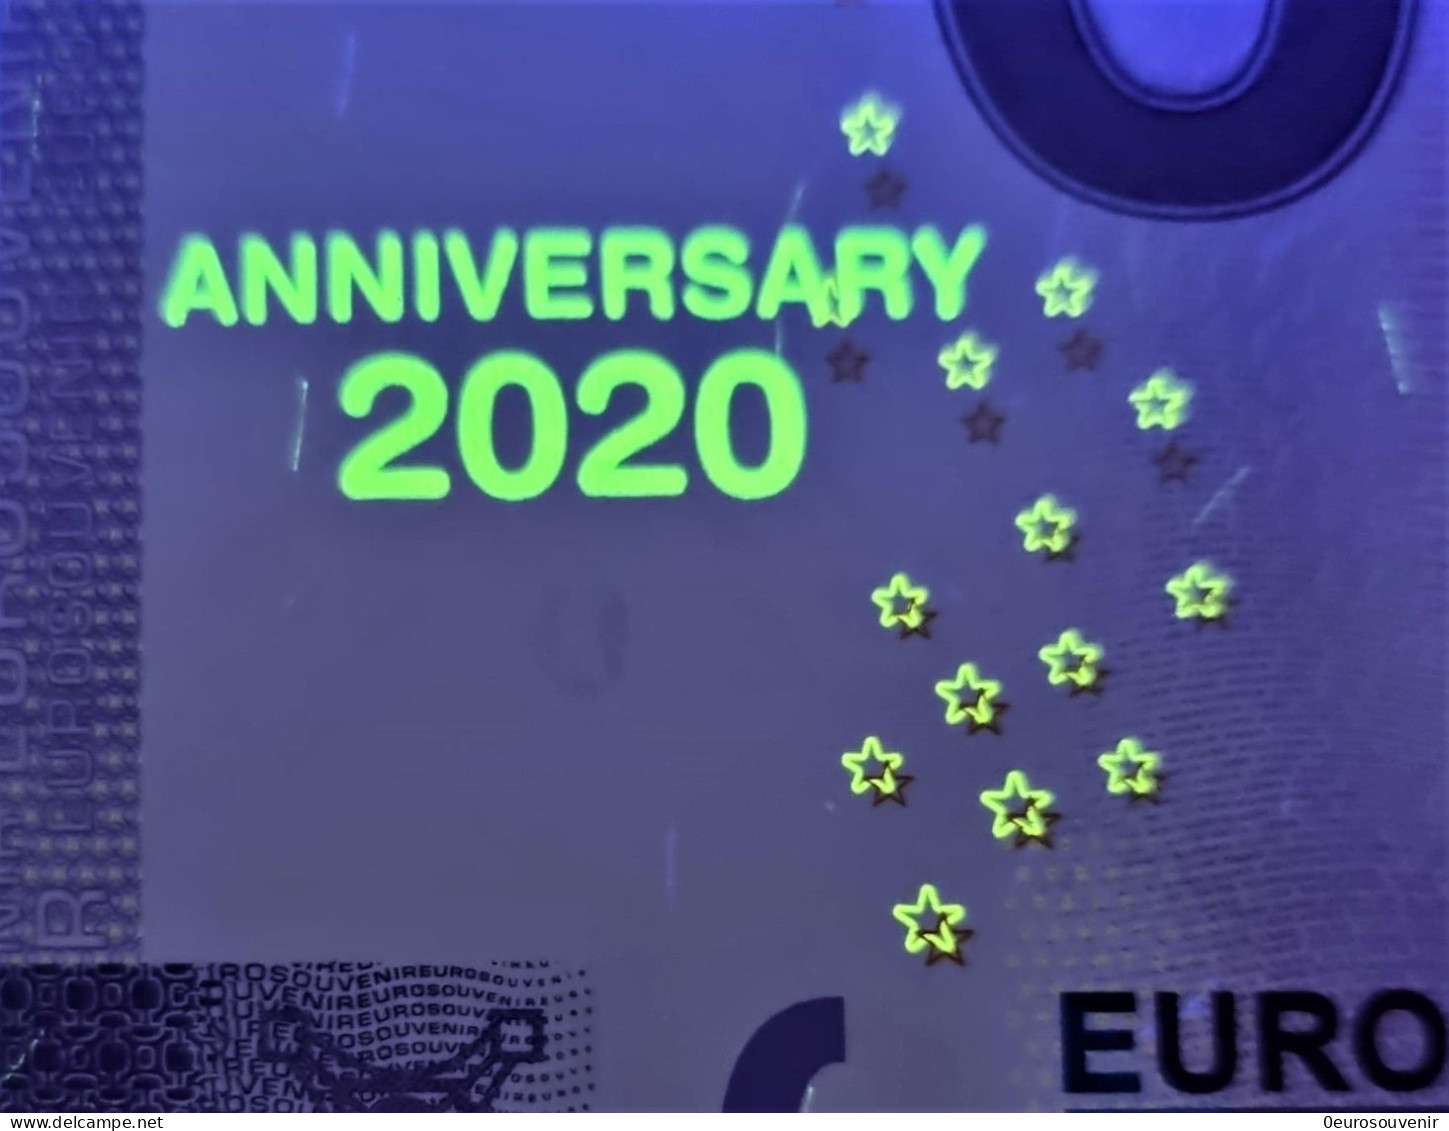 0-Euro XEAW 2022-9 TECHNIK MUSEUM SINSHEIM - PANZER V PANTHER Set NORMAL+ANNIVERSARY - Pruebas Privadas